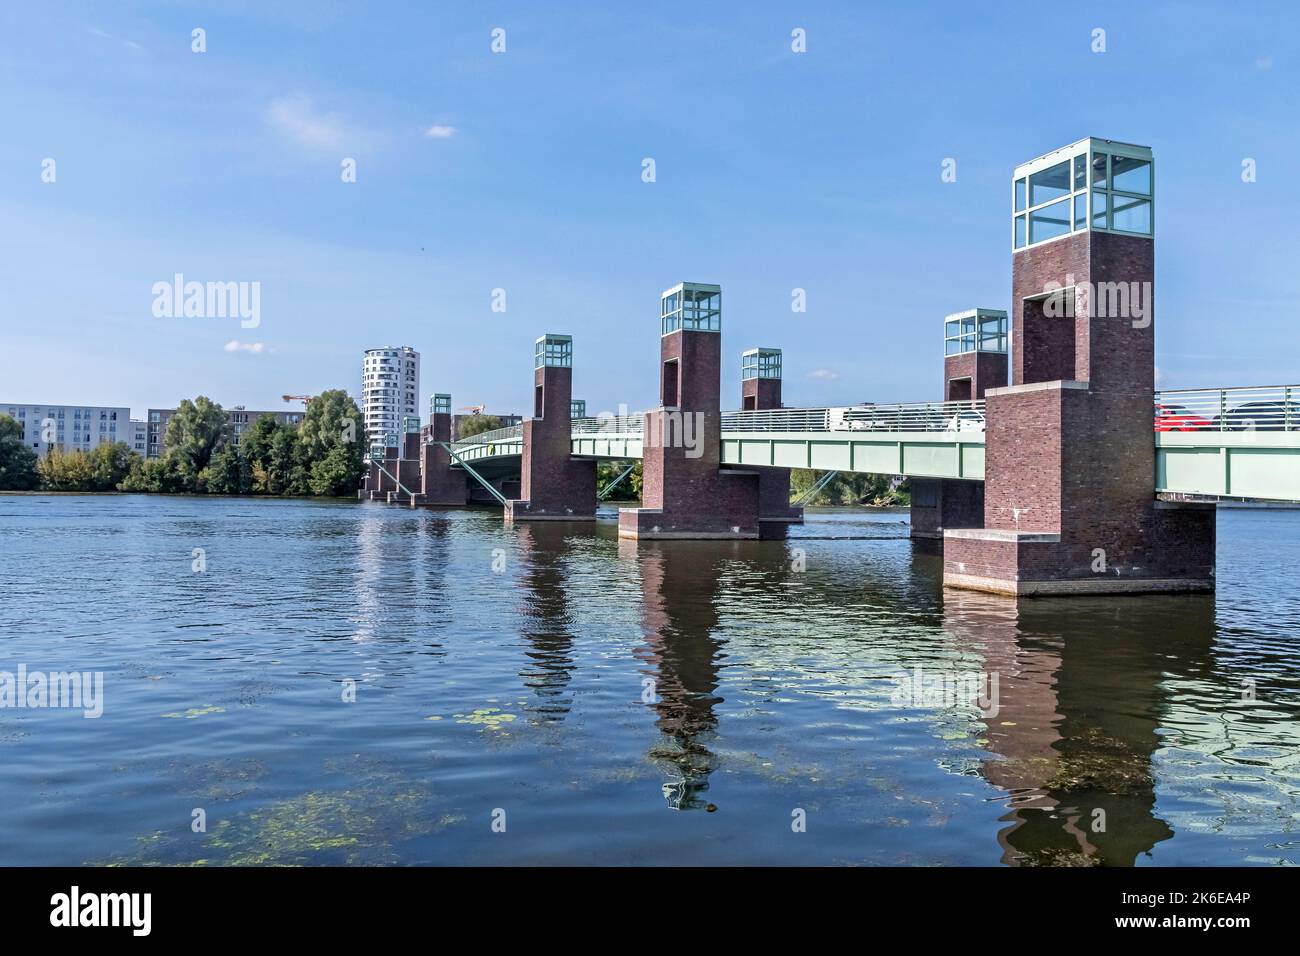 Berlin, Germany - September 4, 2022: Maselake bay or Spandauer-See of the River Havel with its steel beam (girder) bridge Spandauer-See Bruecke Stock Photo